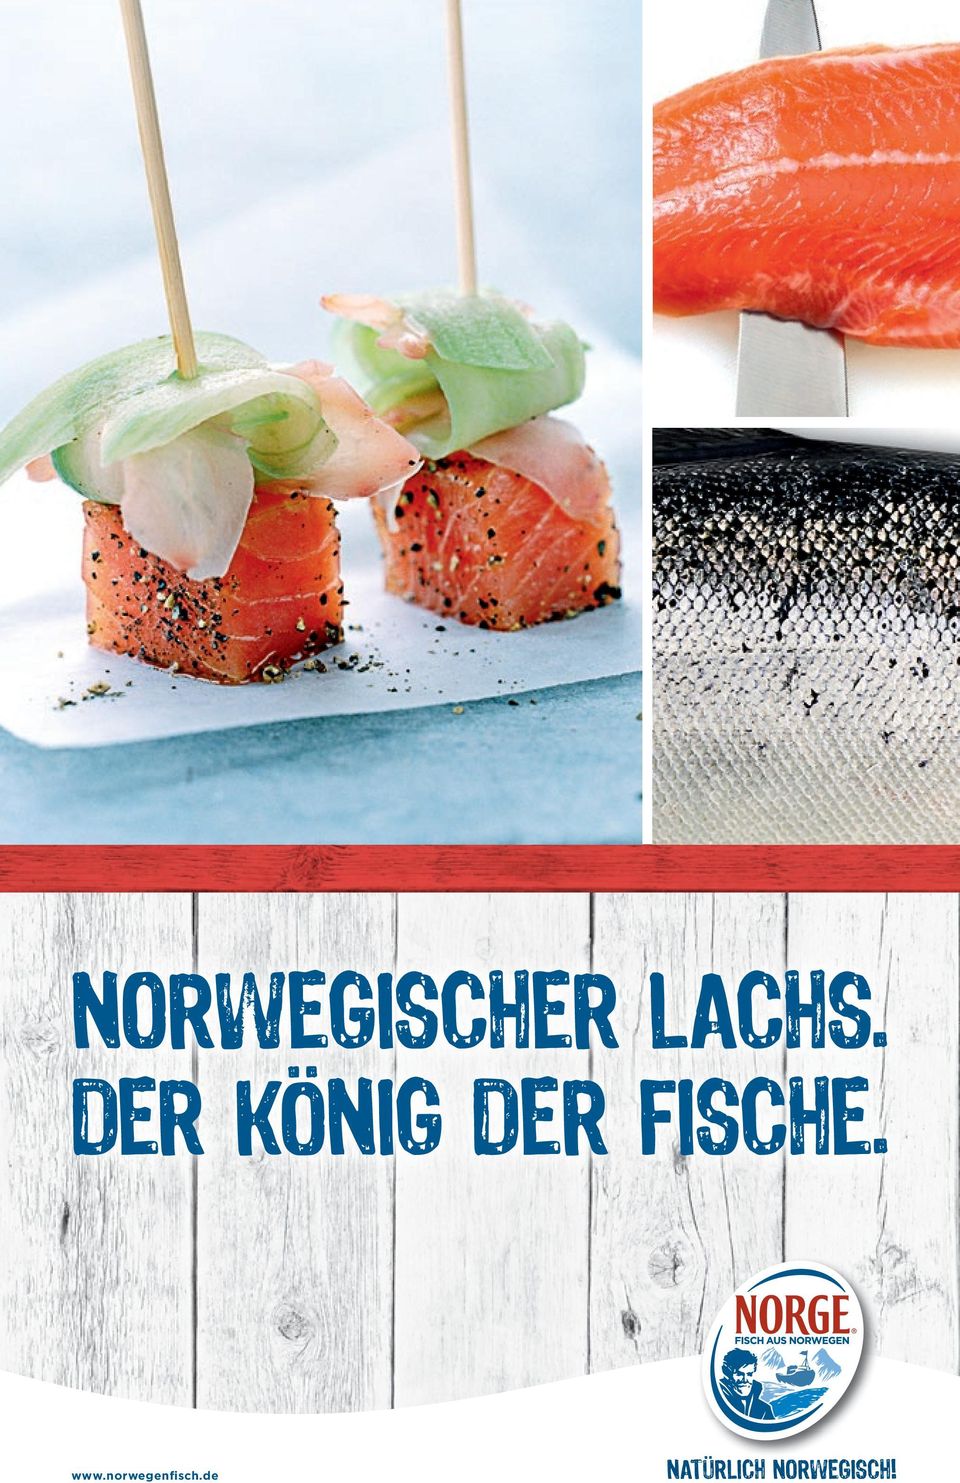 www.norwegenfisch.